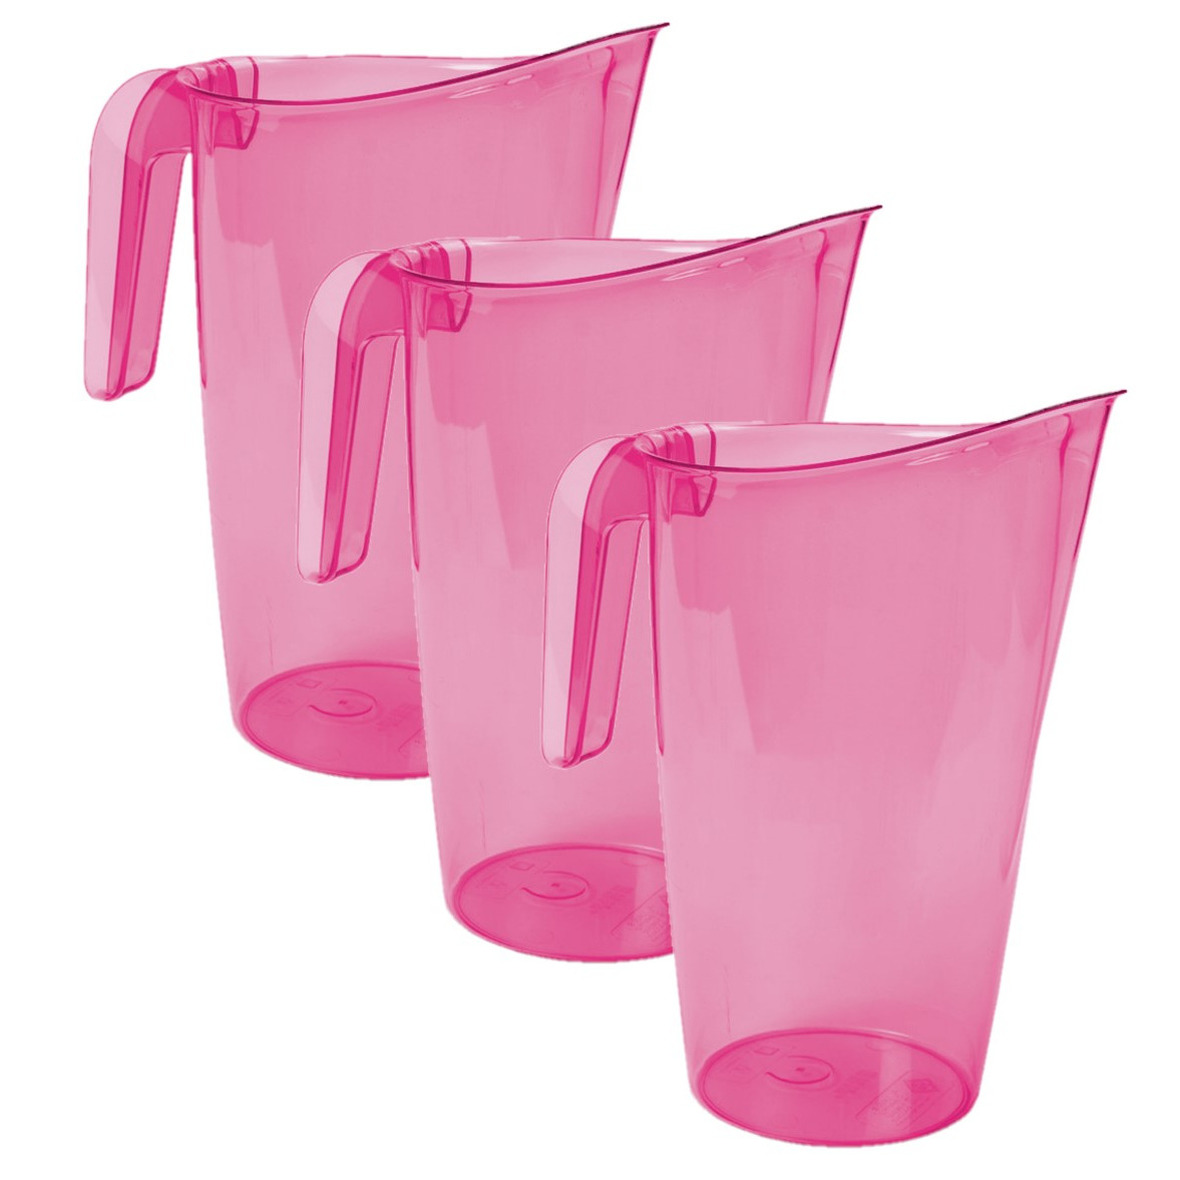 Hega Hogar 3x stuks waterkan/sapkan transparant/roze met inhoud 1.75 liter kunststof -